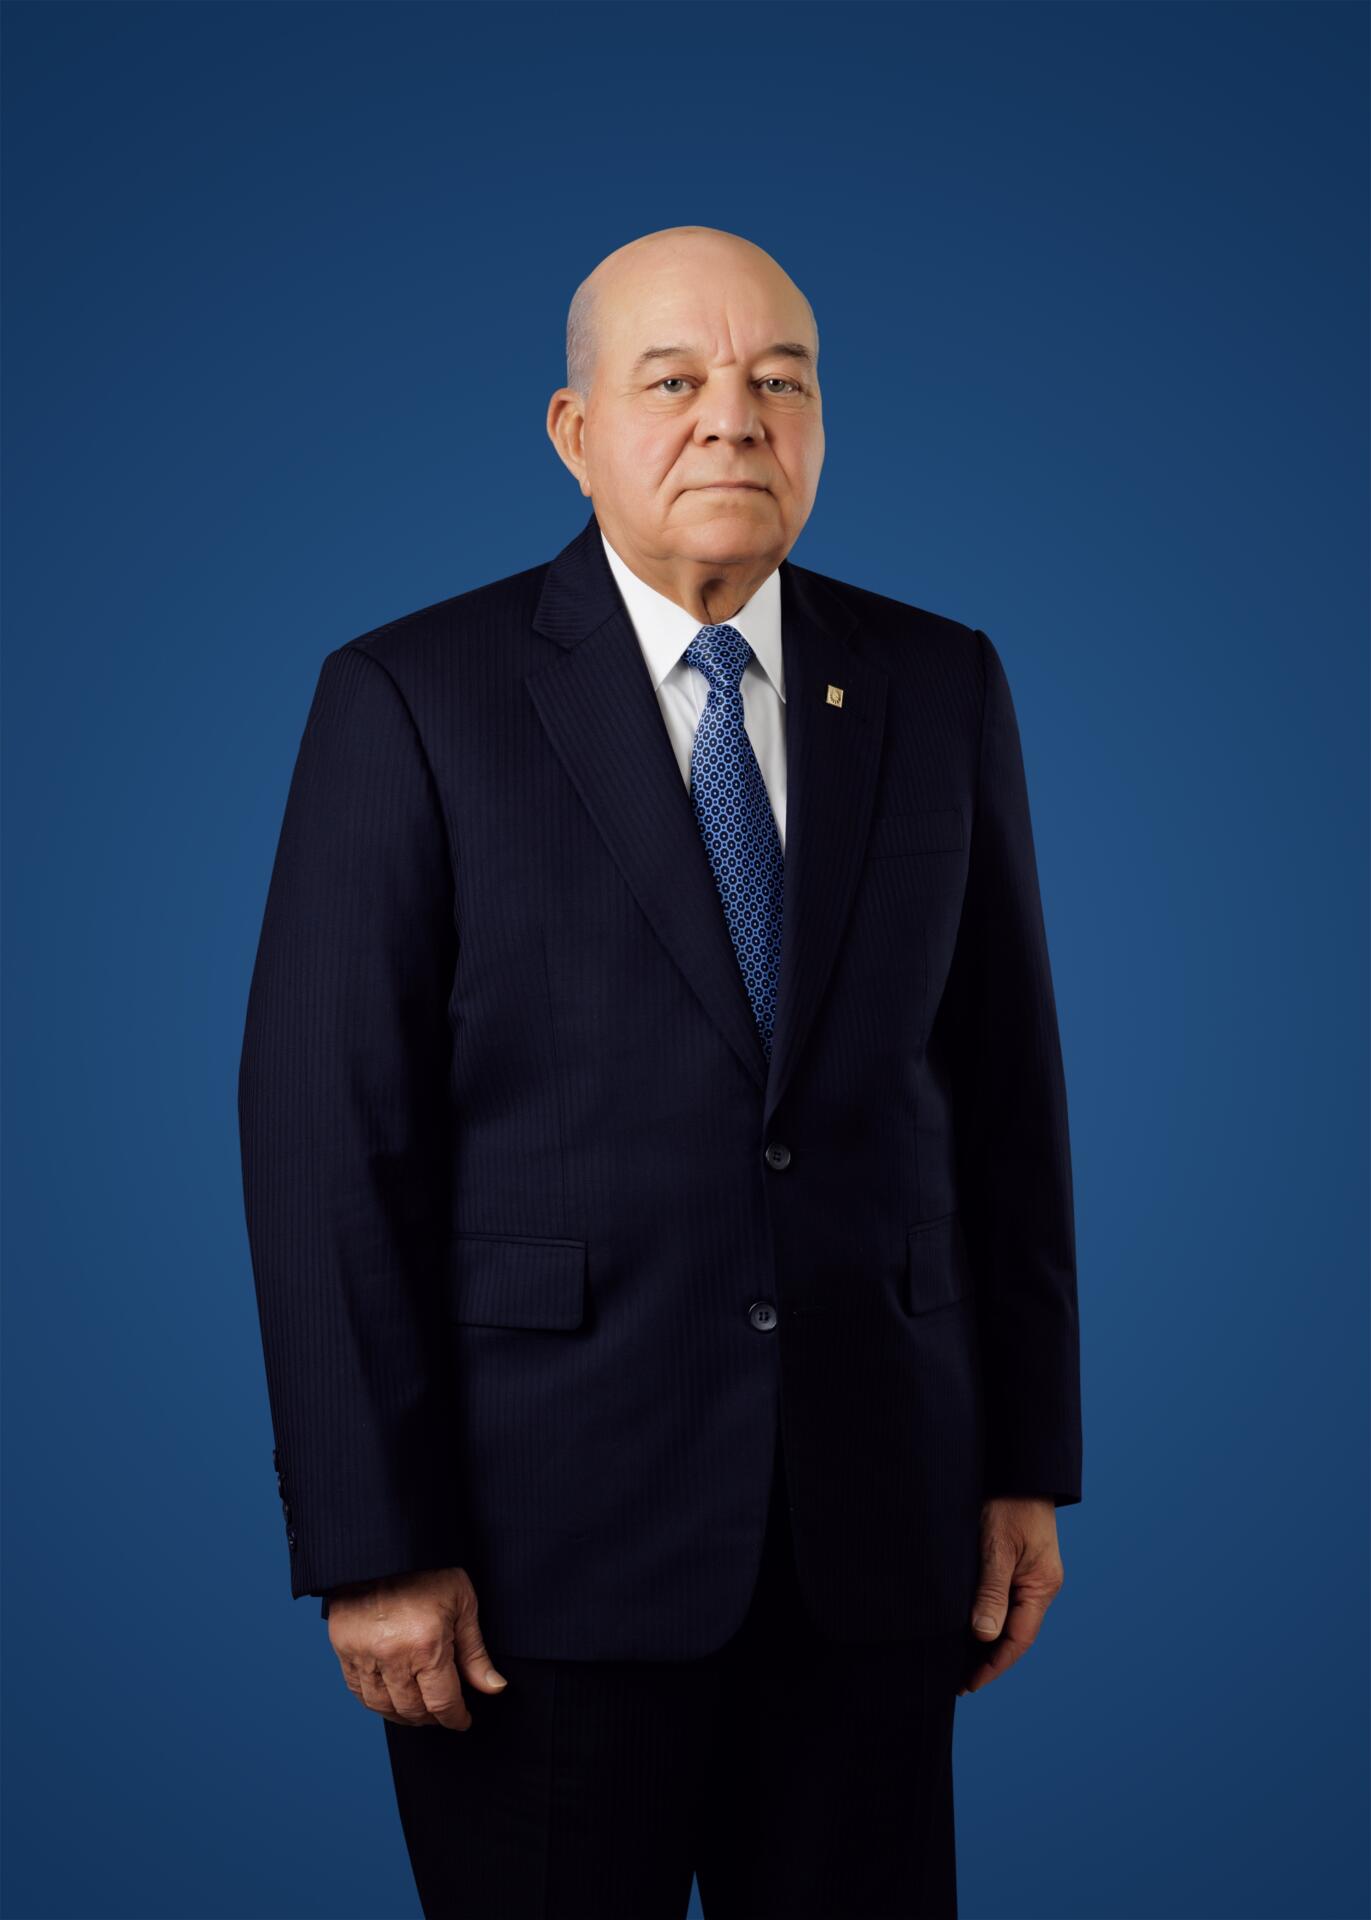 Manuel E. Jiménez F., presidente ejecutivo de Grupo Popular, casa matriz de AFI Popular. Foto: fuente externa